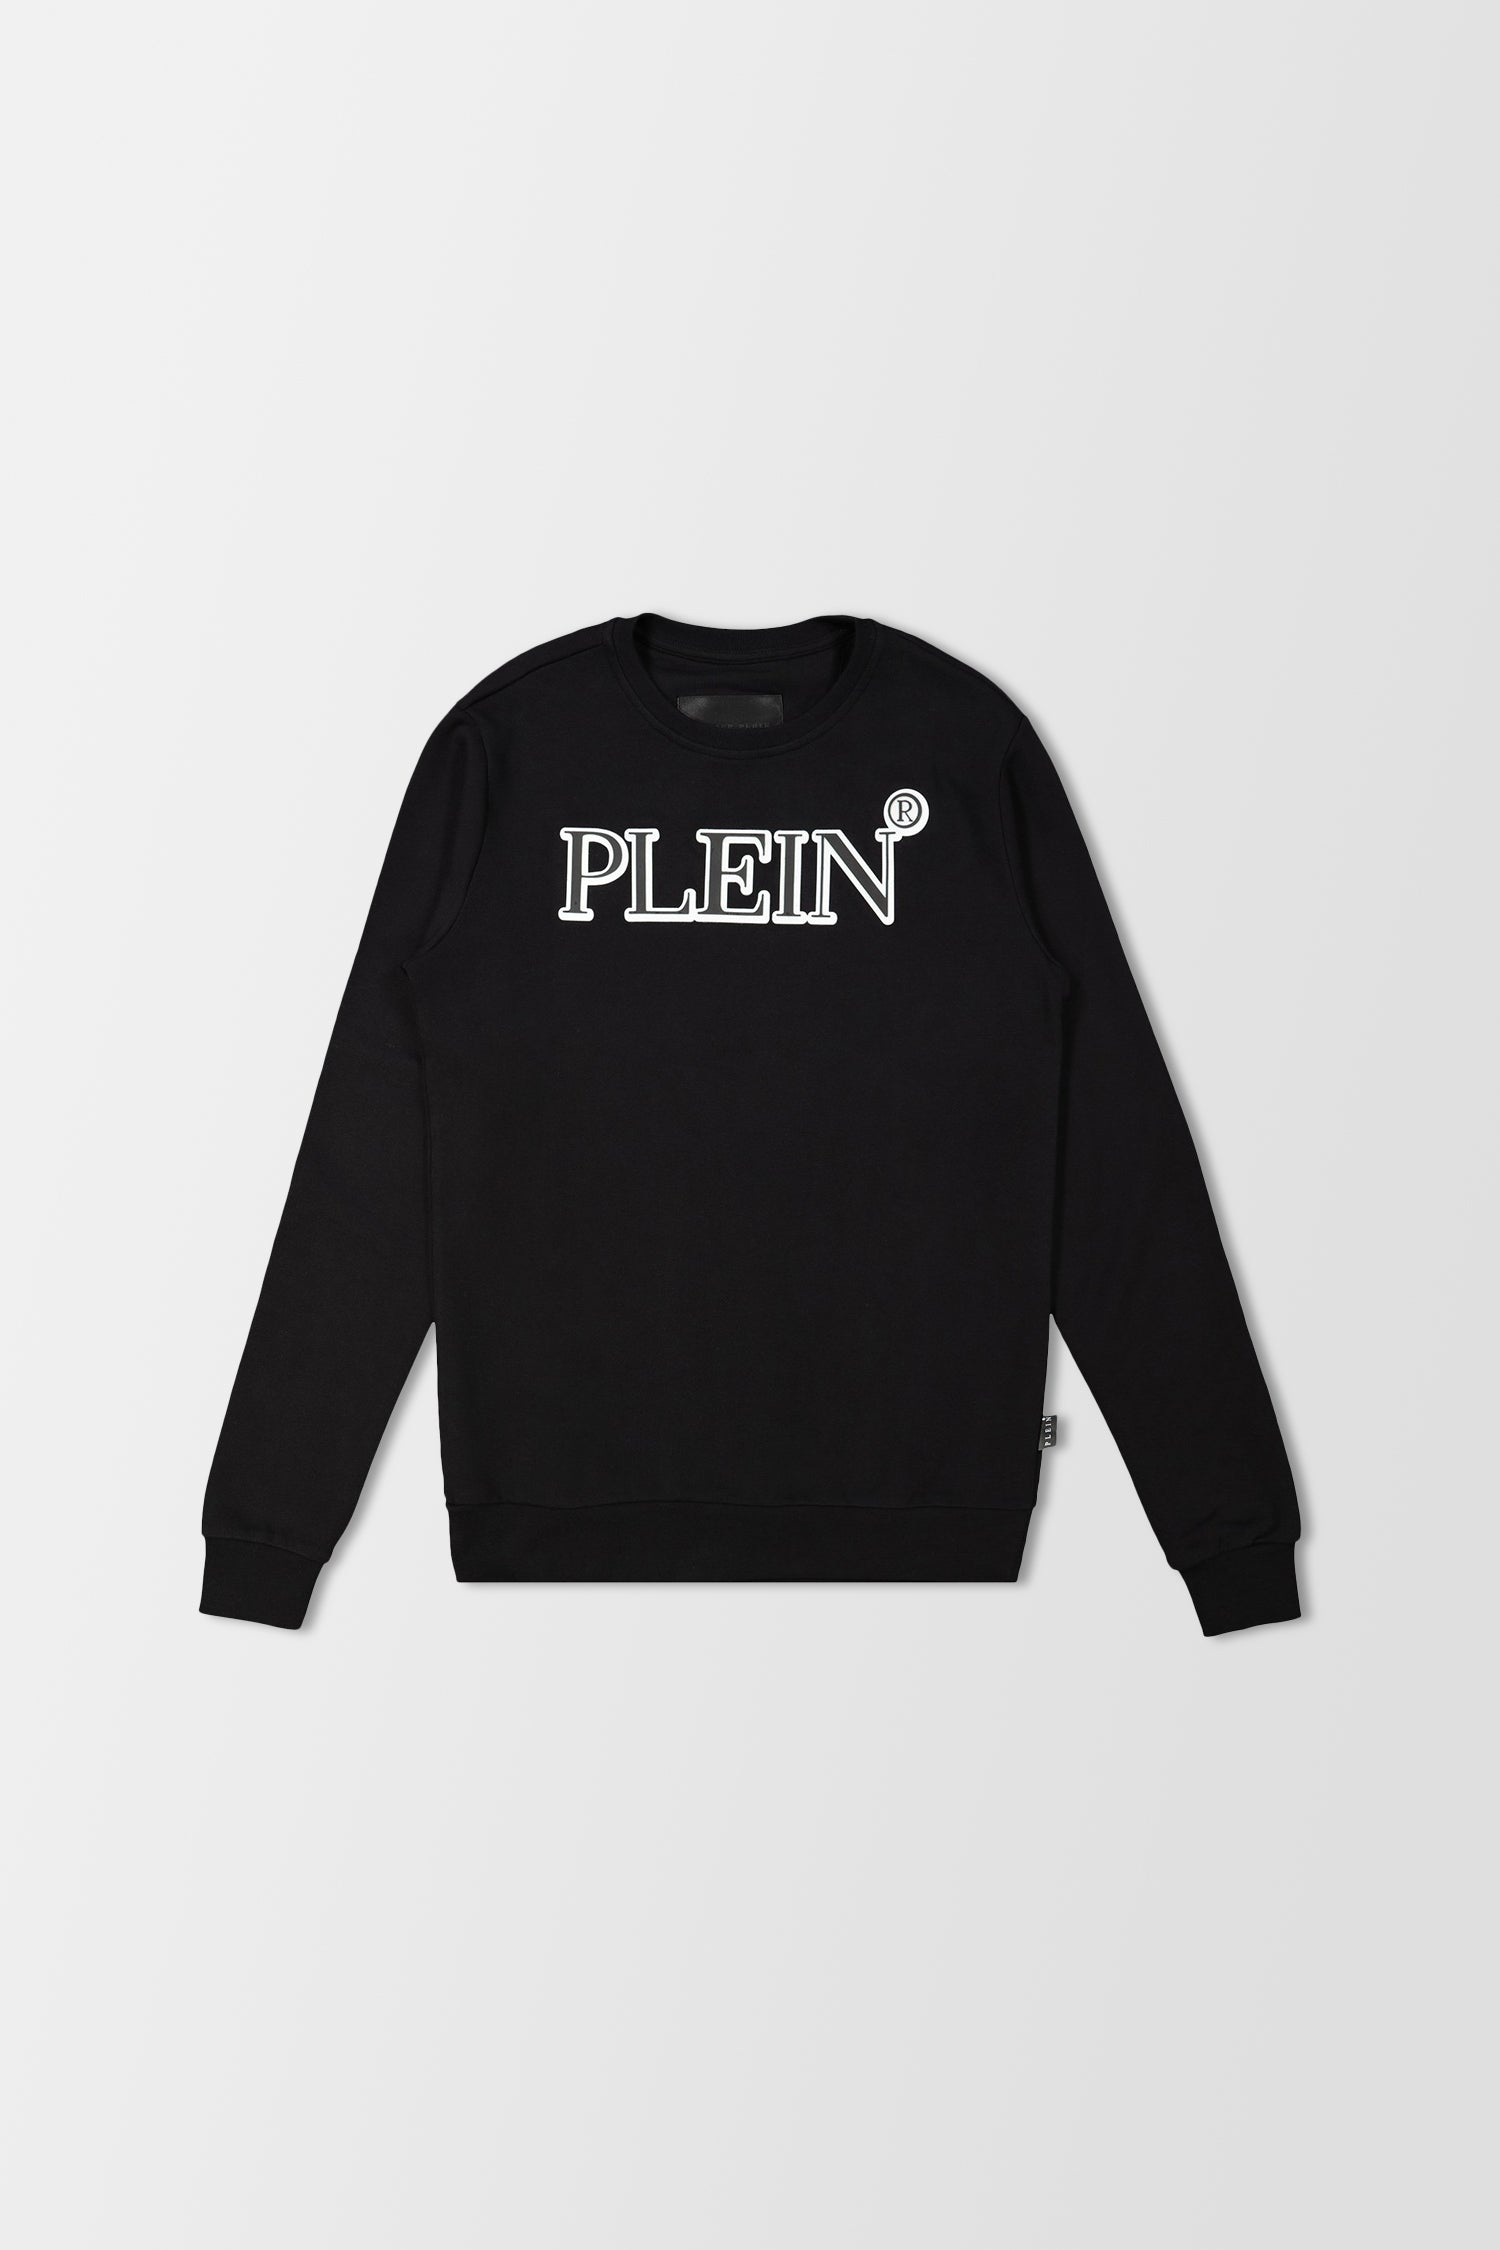 Philipp Plein  LS Black/White TM Sweatshirt